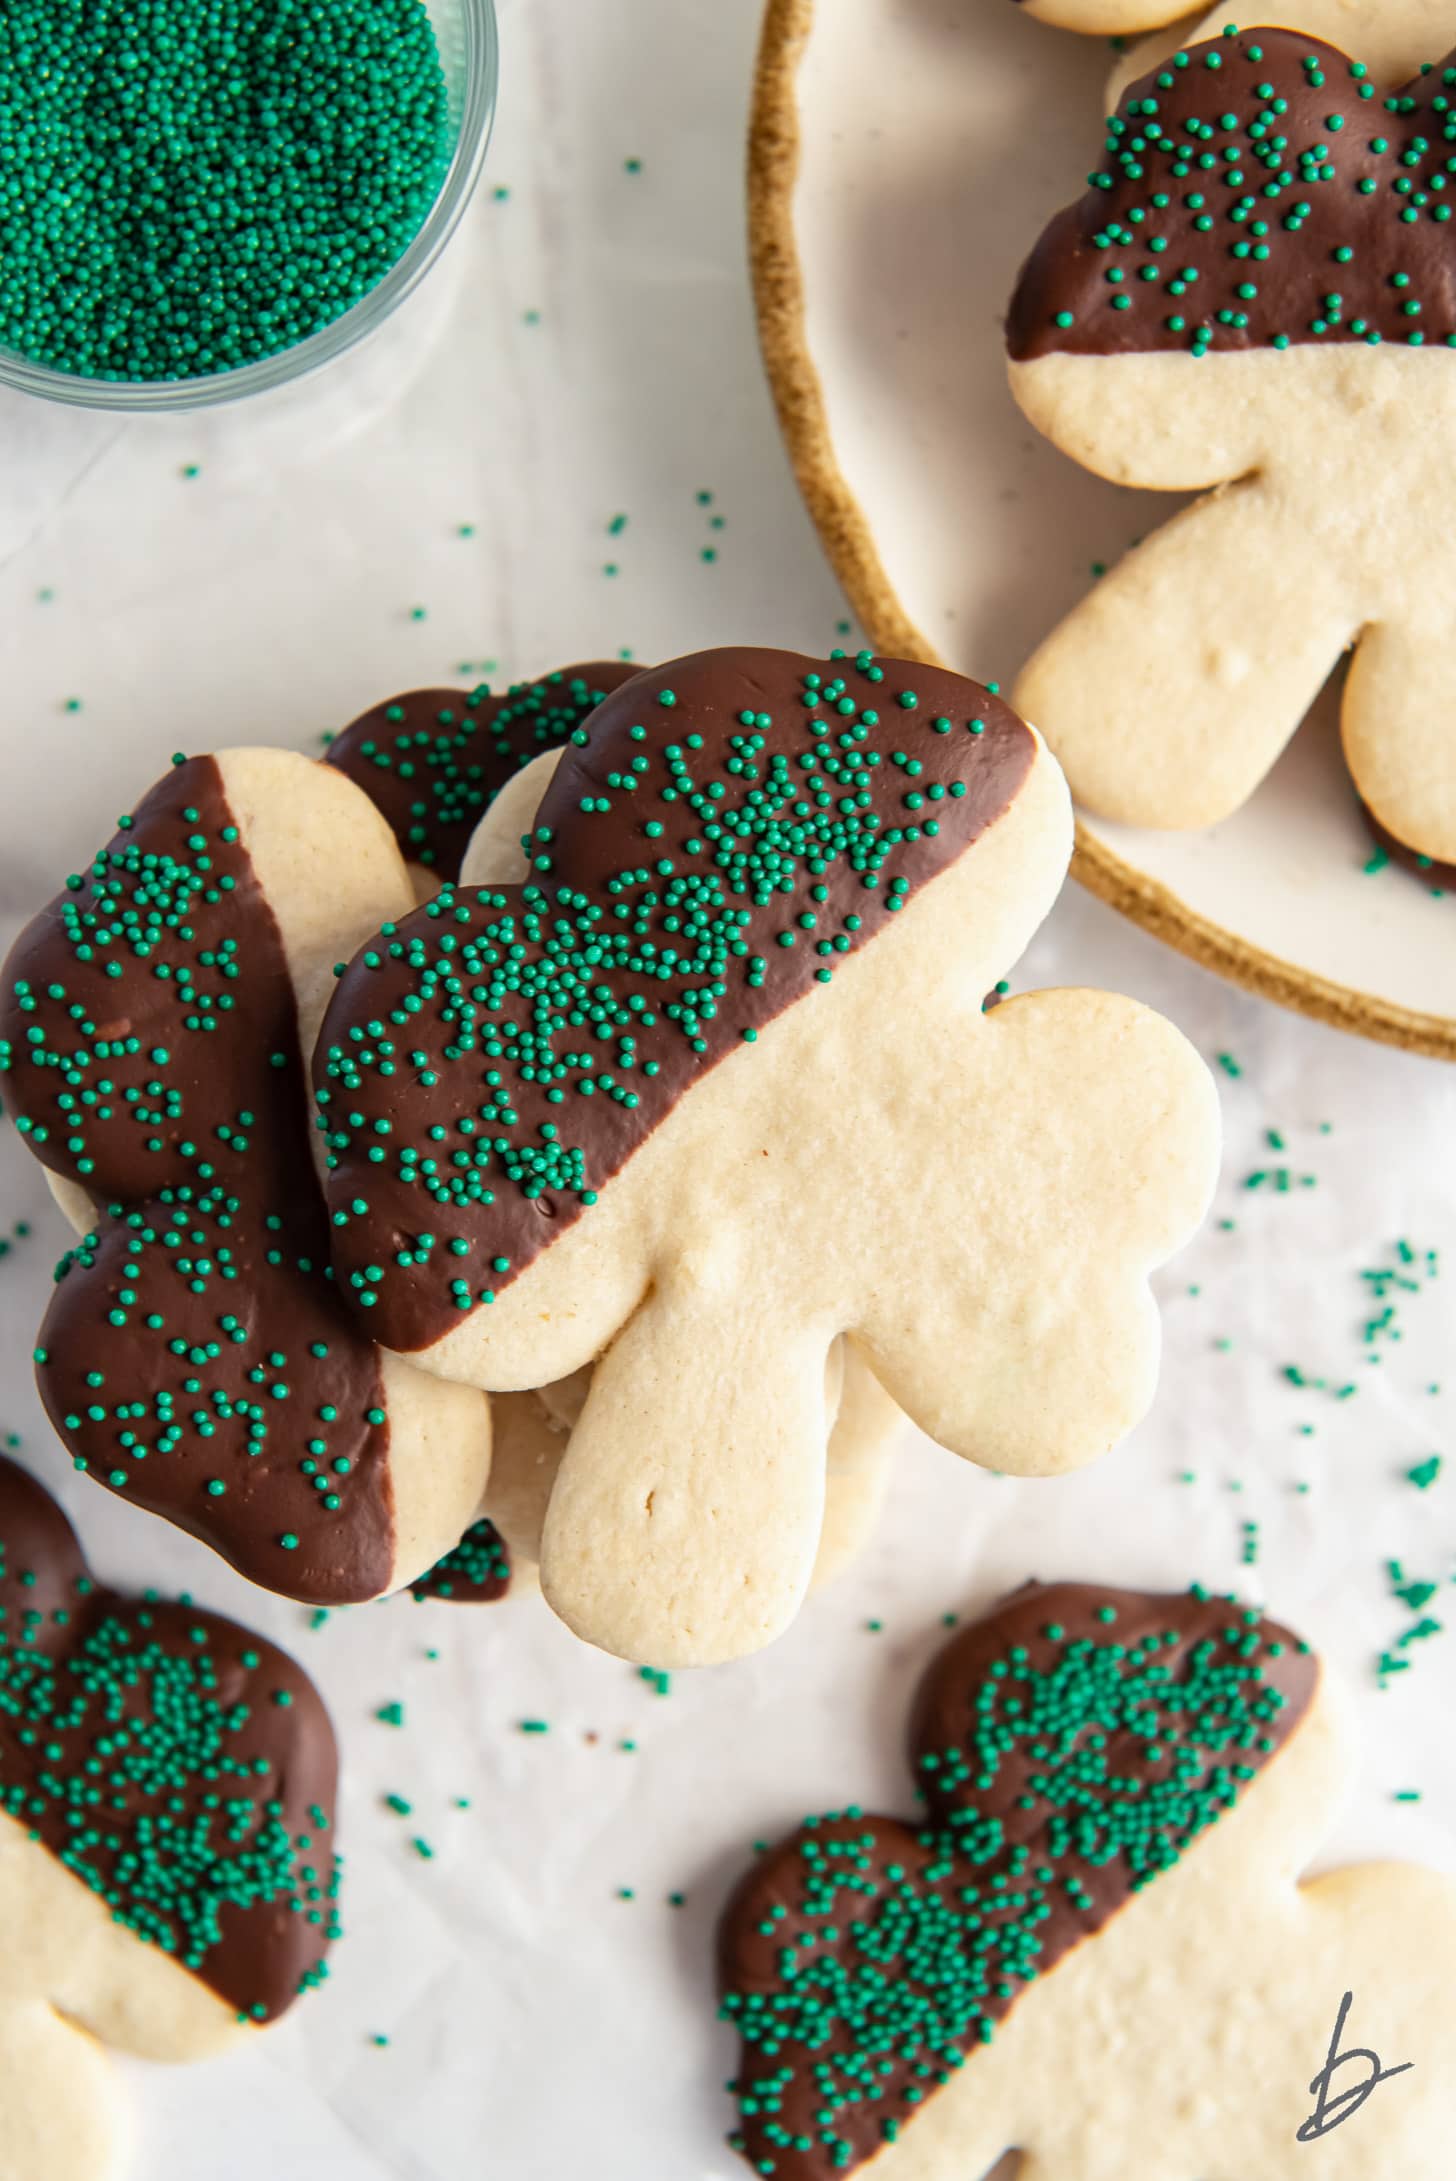 chocolate dipped shamrock sugar cookie with green sprinkles on top of more shamrock cookies